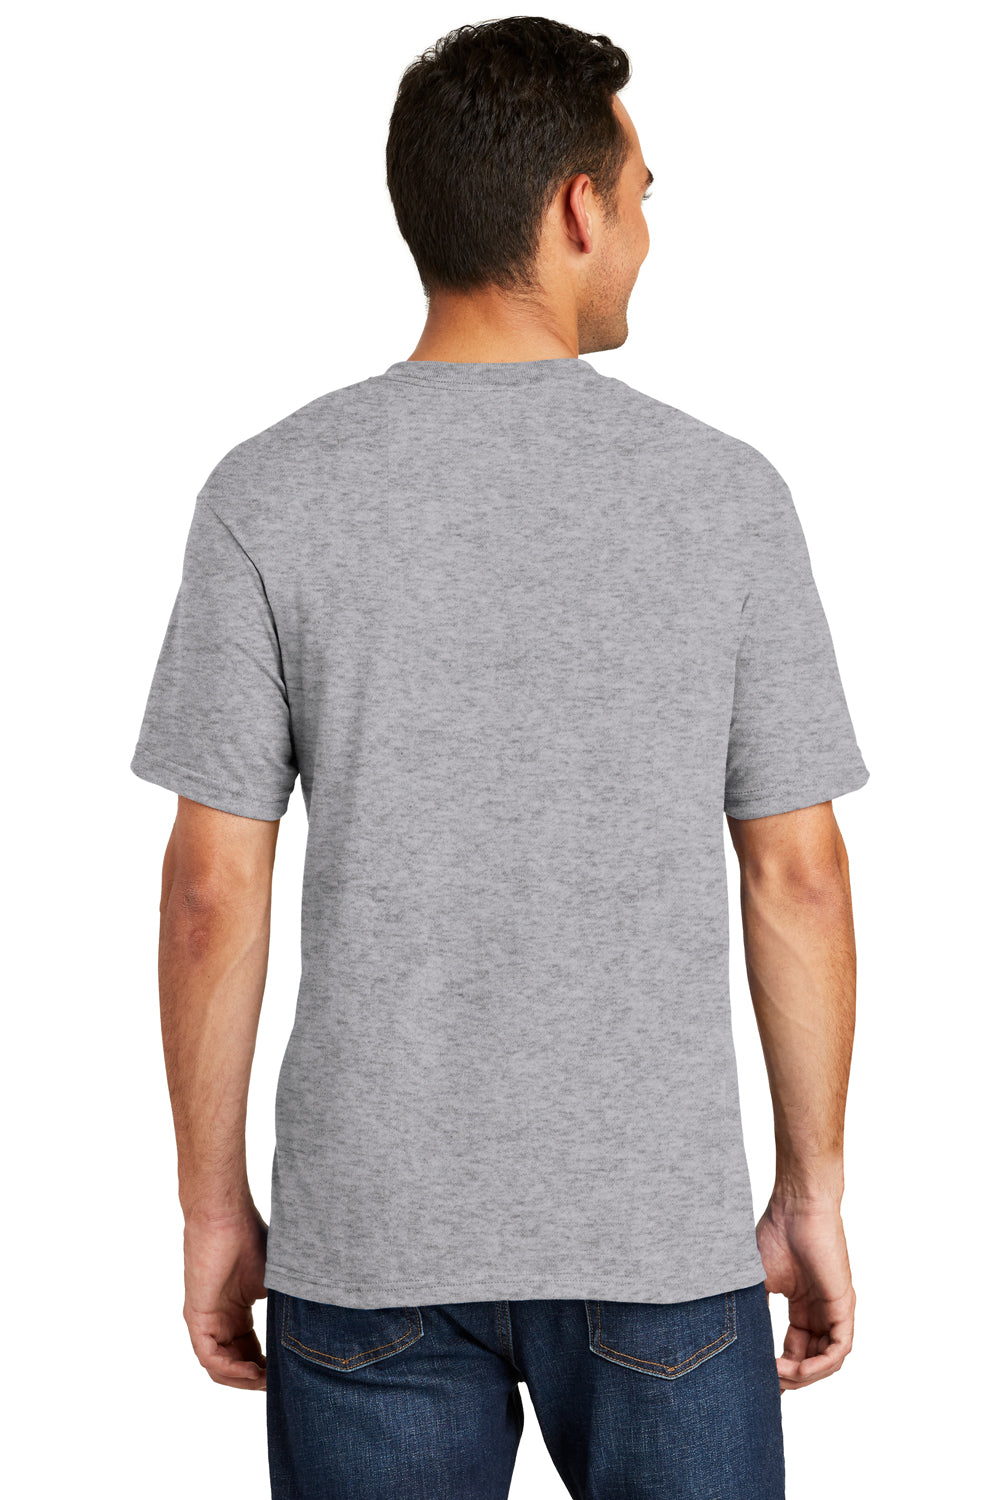 Port & Company USA100 Mens USA Made Short Sleeve Crewneck T-Shirt Heather Grey Back